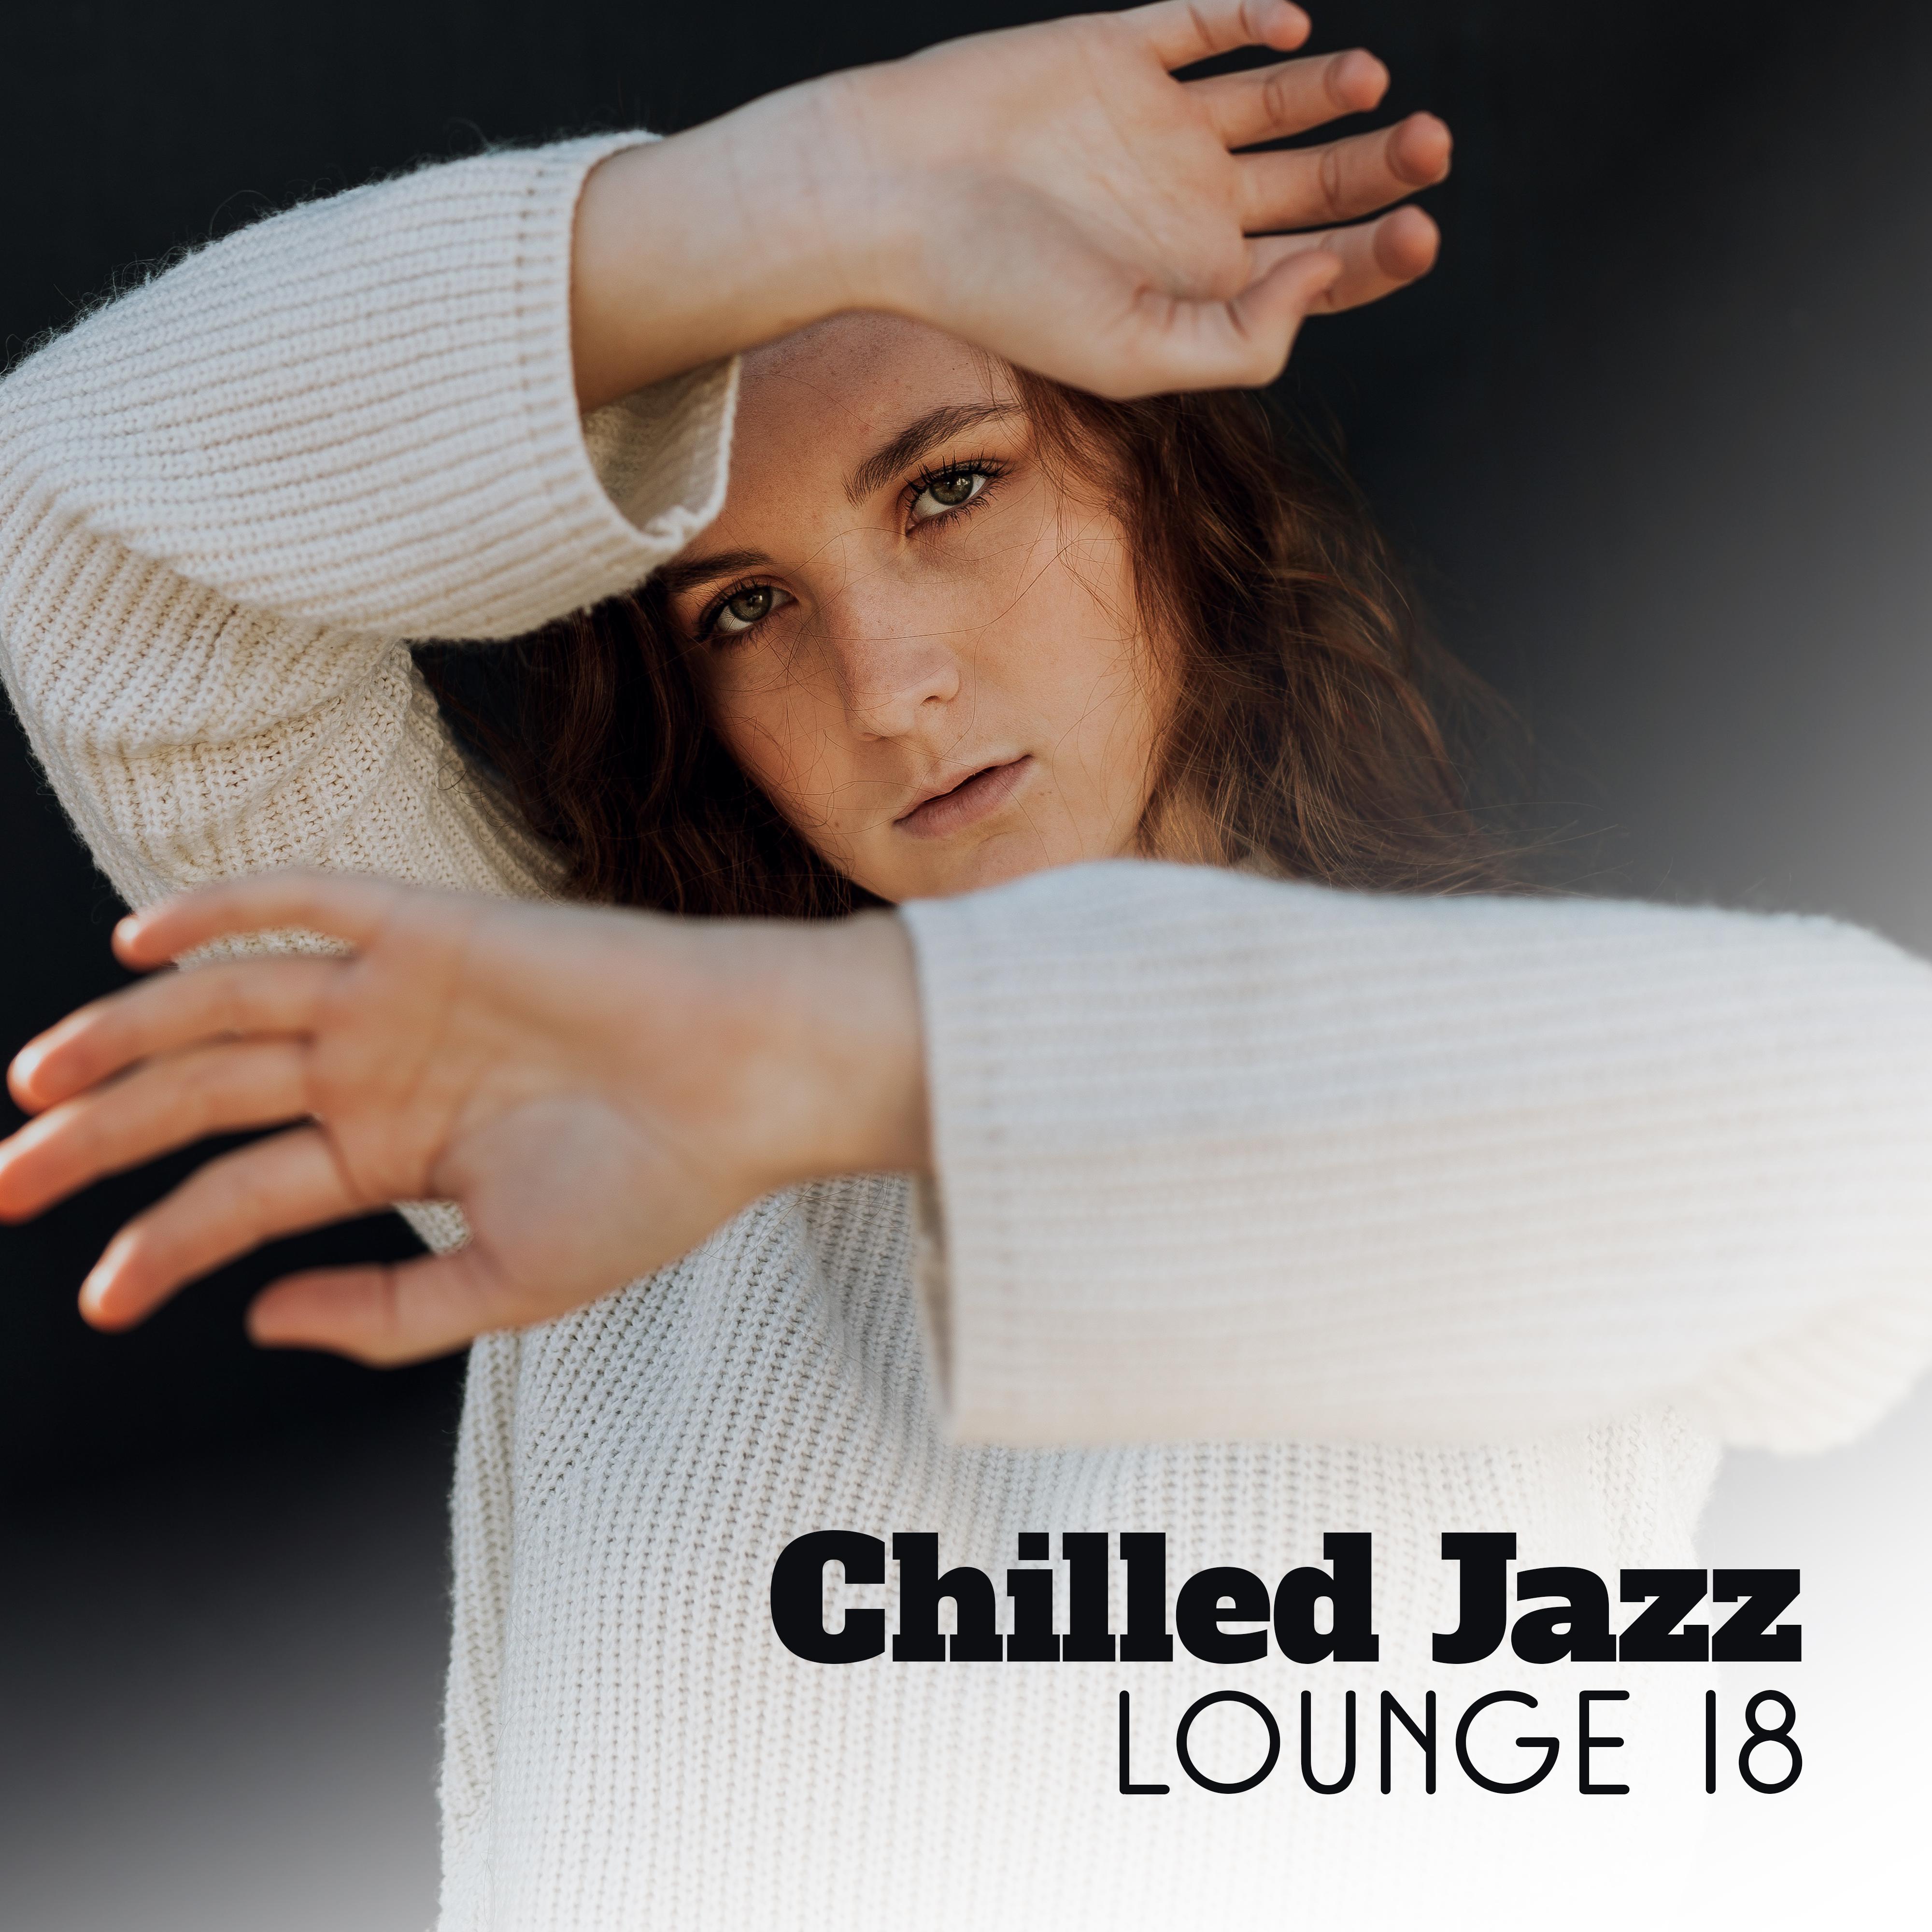 Chilled Jazz Lounge 18